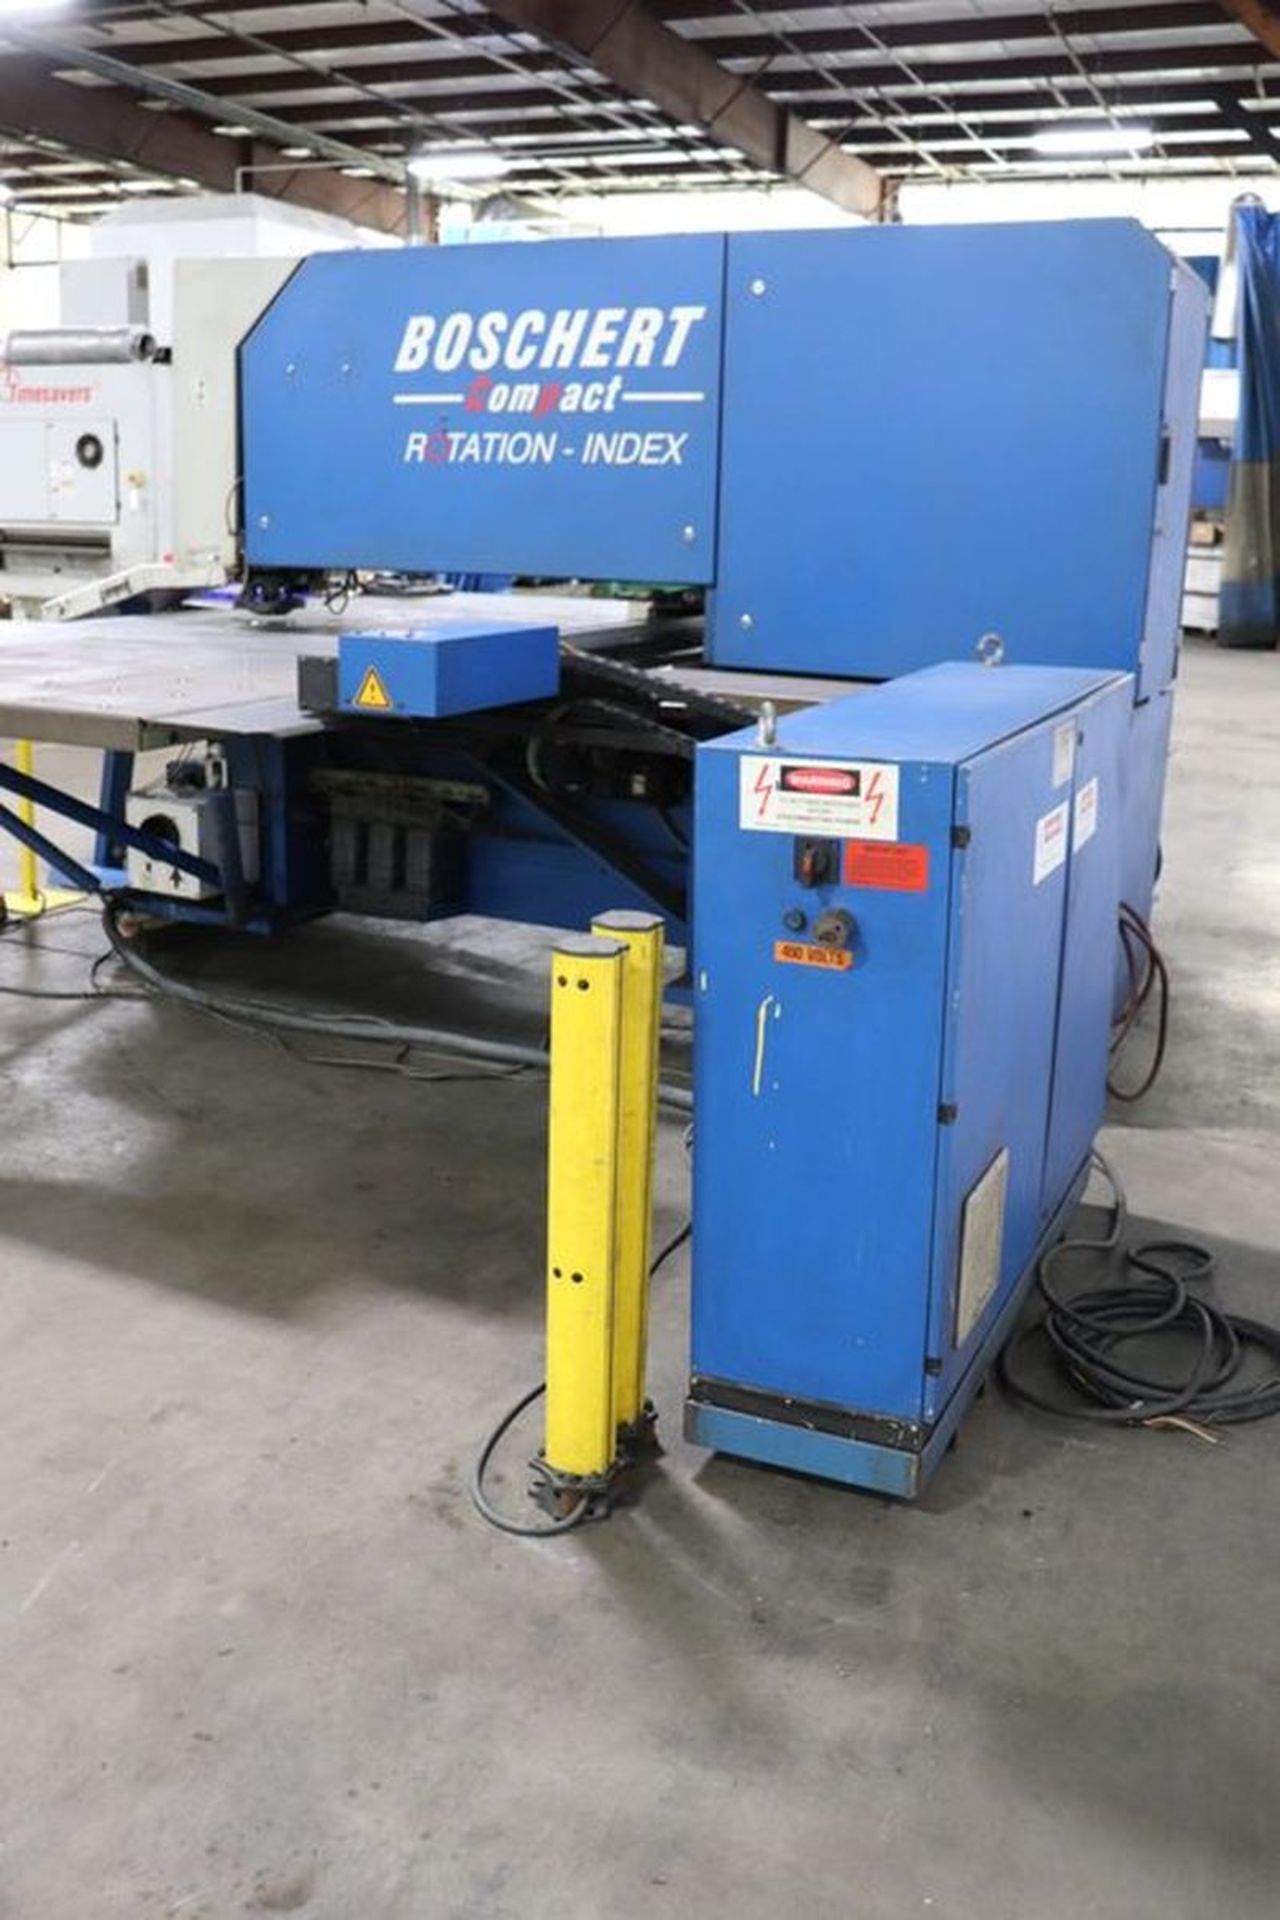 Boschert Compact 1250 Rotation-Index 36 Ton CNC Punching Machine - Image 14 of 18